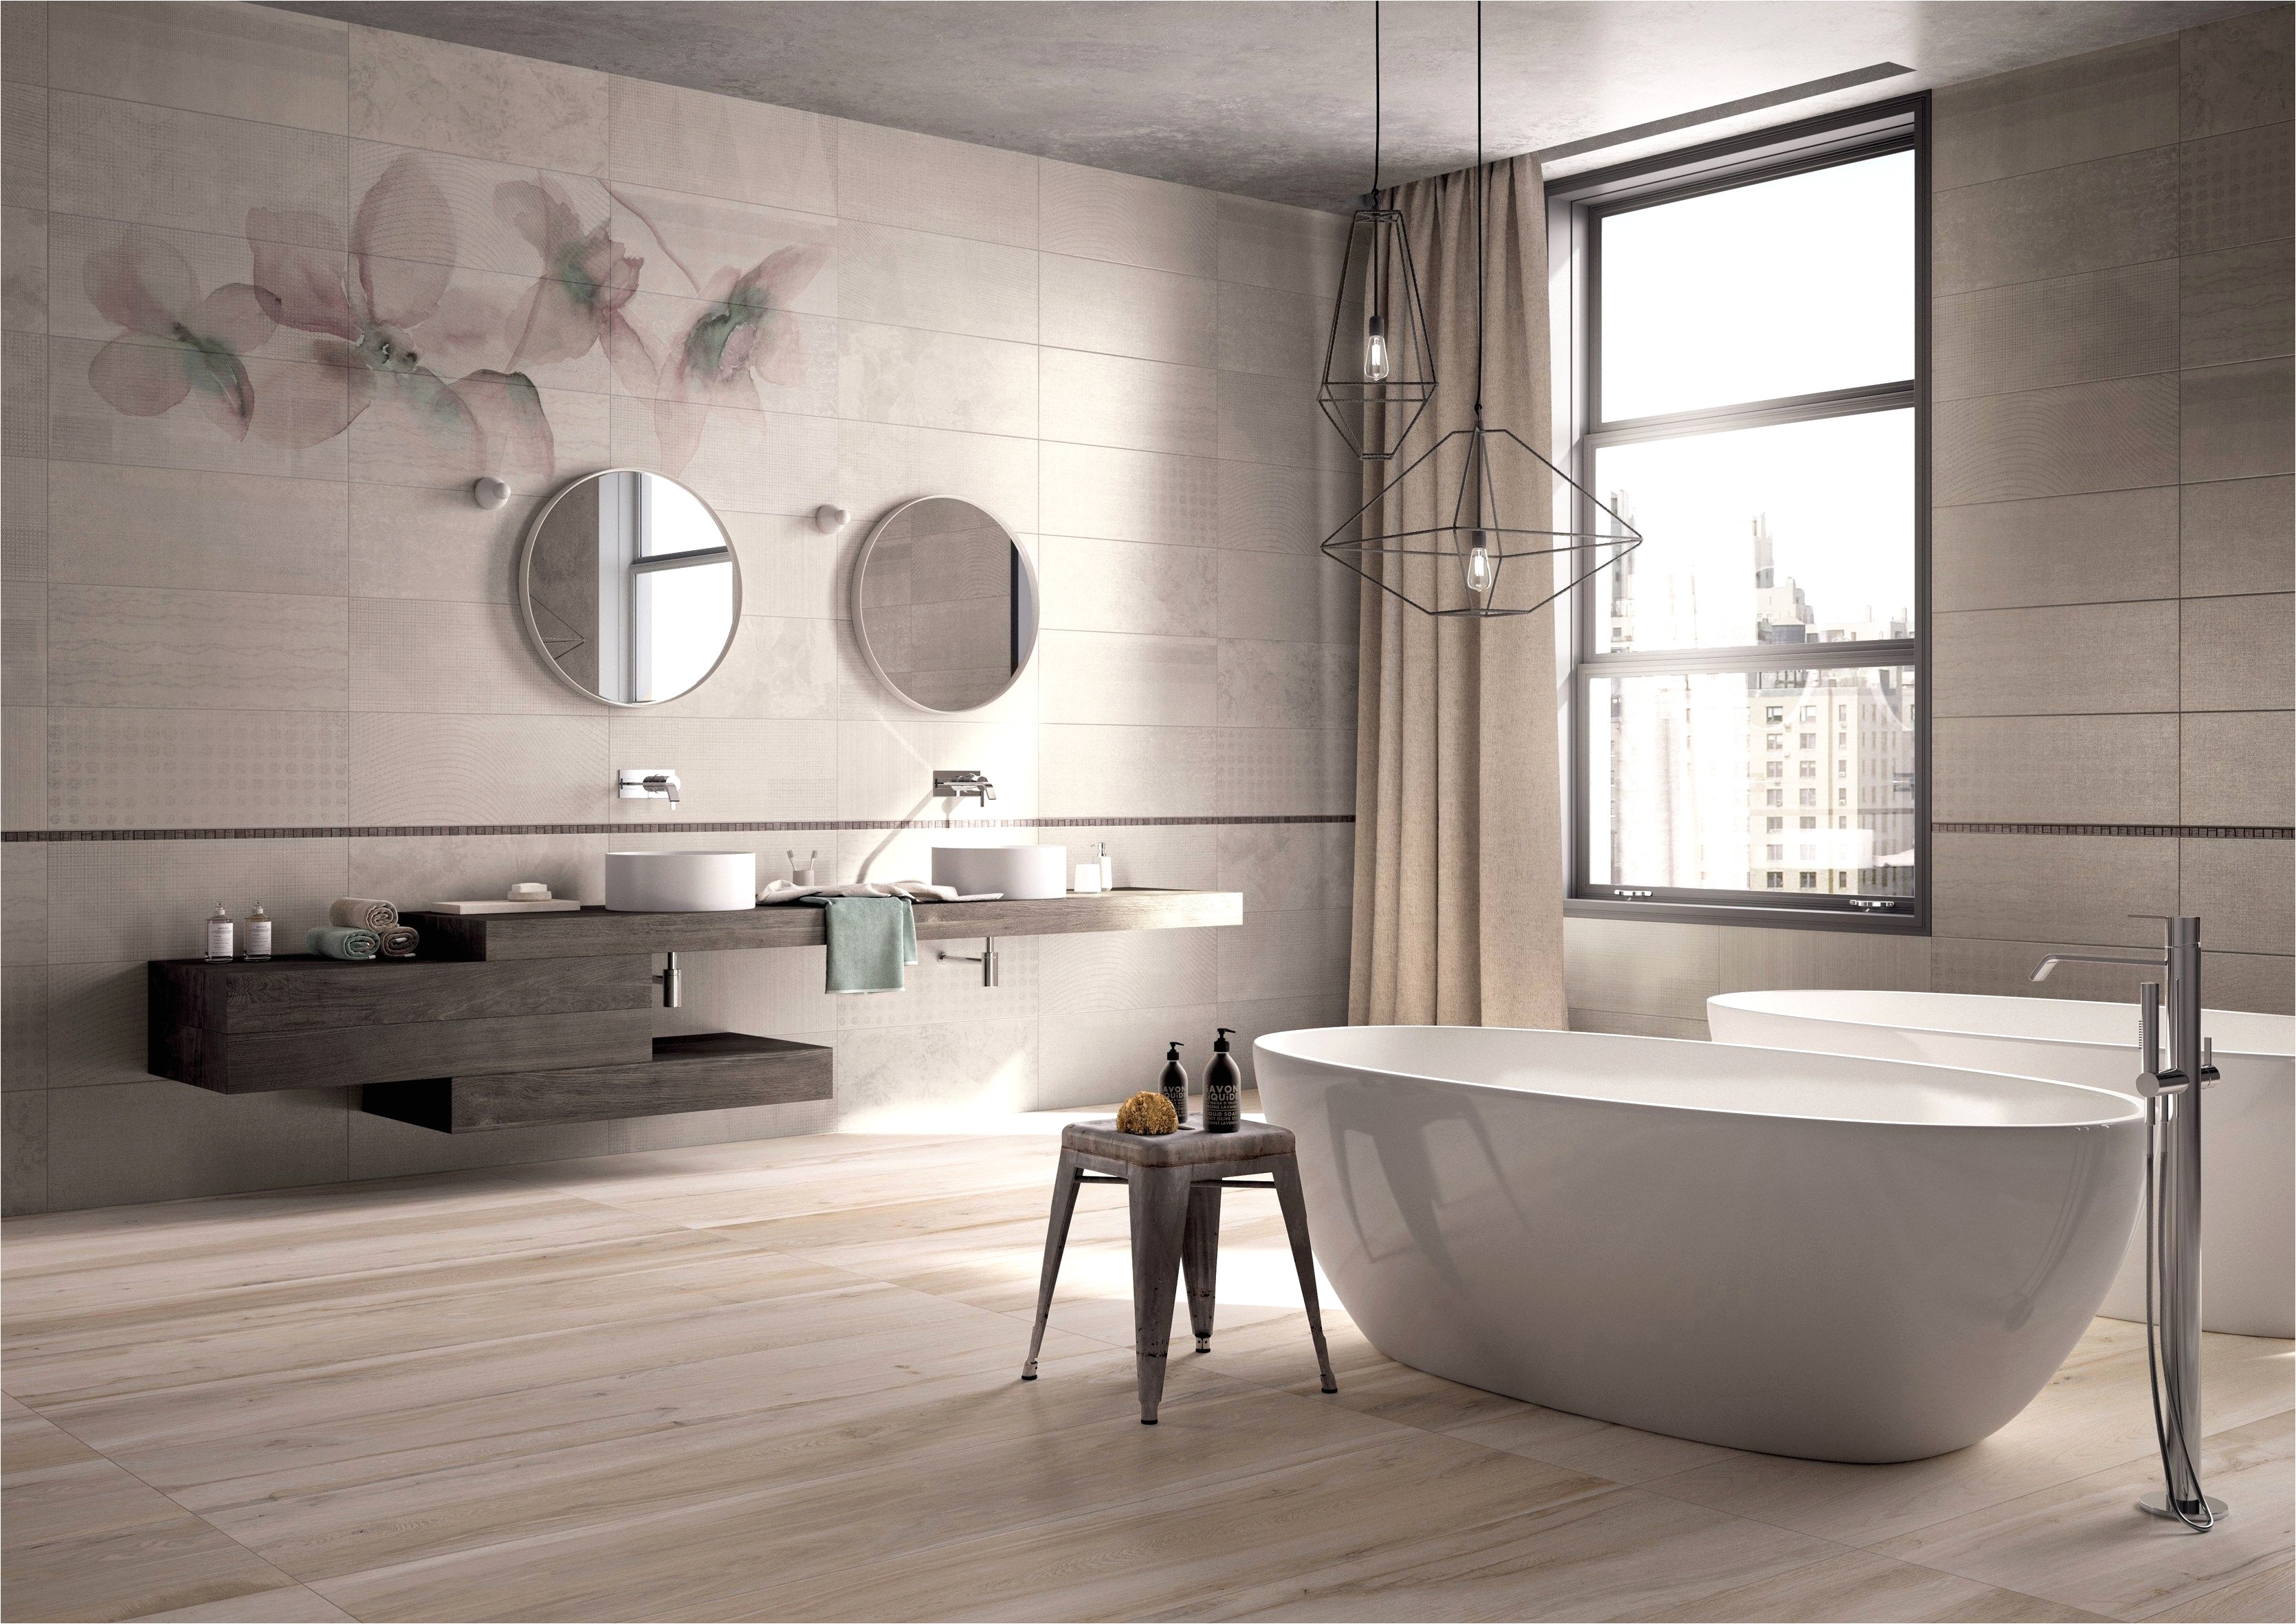 Bathroom Wall Tiles Design Remarkable Bathroom Tile Ideas for Small Bathrooms within Fresh